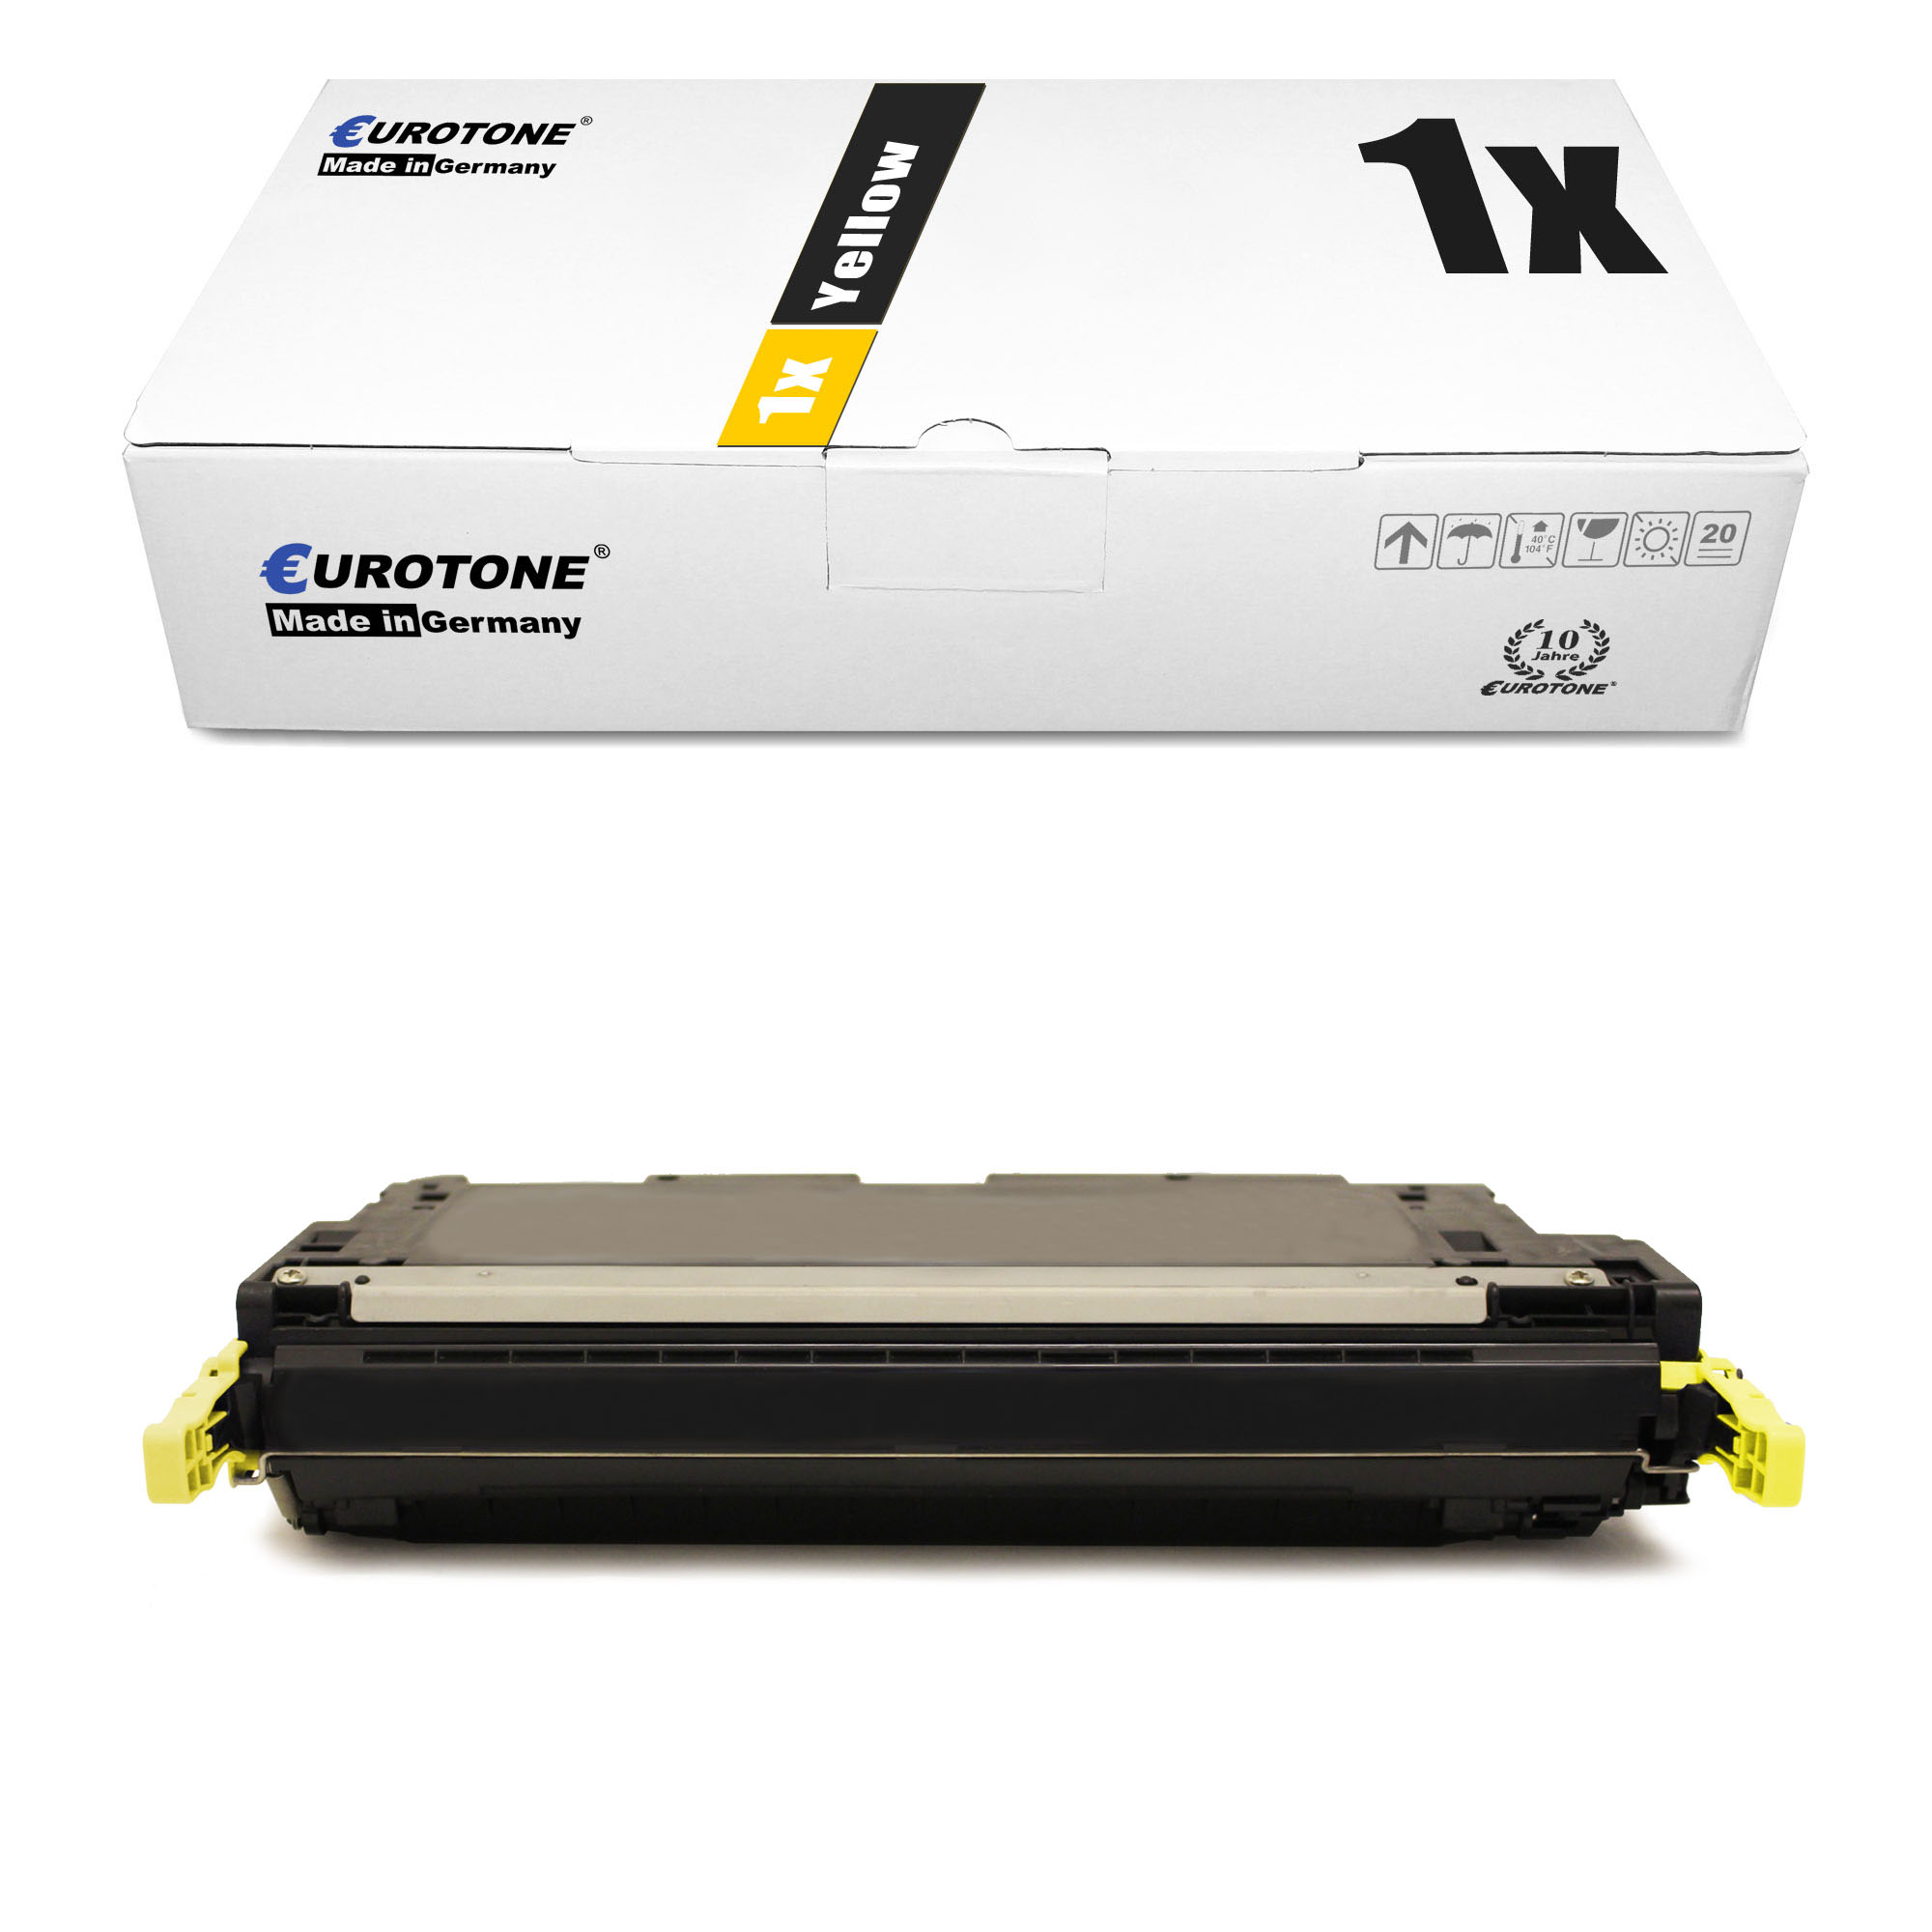 EUROTONE CP4005 1xY Toner Cartridge (HP 642A) Yellow / CB402A